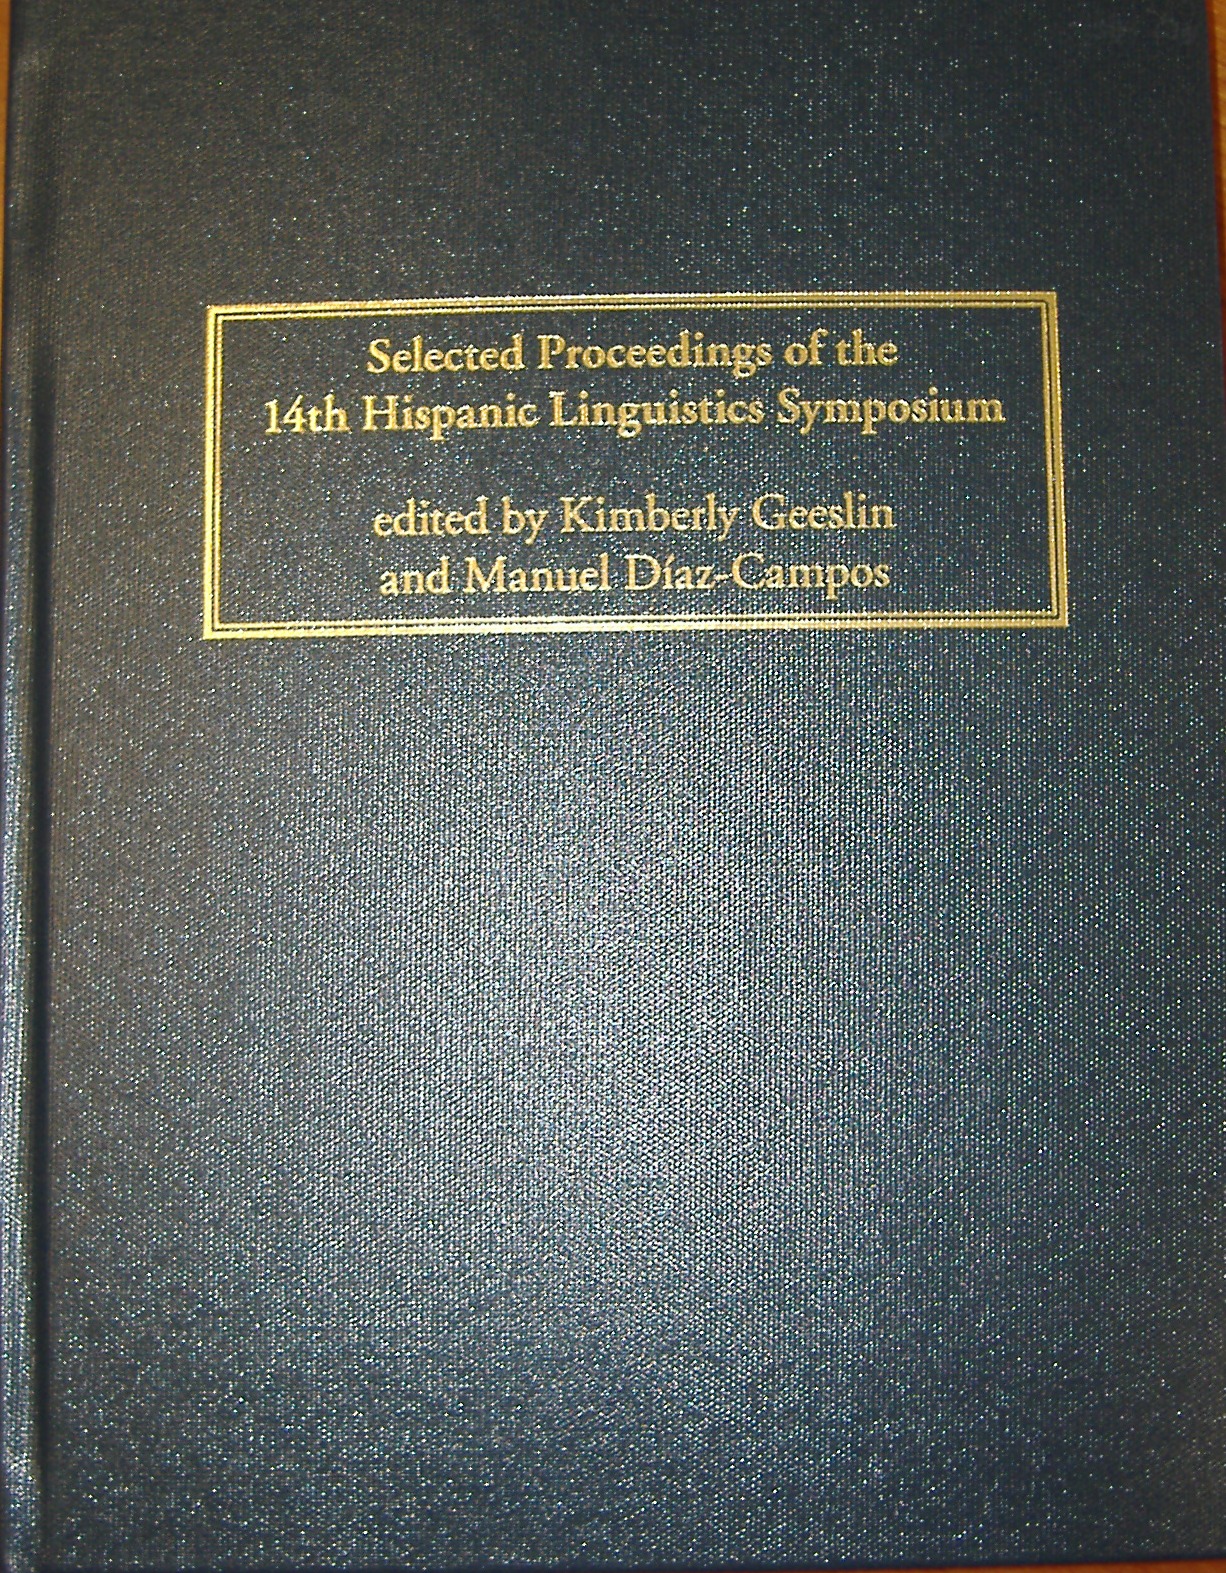 Selected Proceedings of the 14th Hispanic Linguistics Symposium